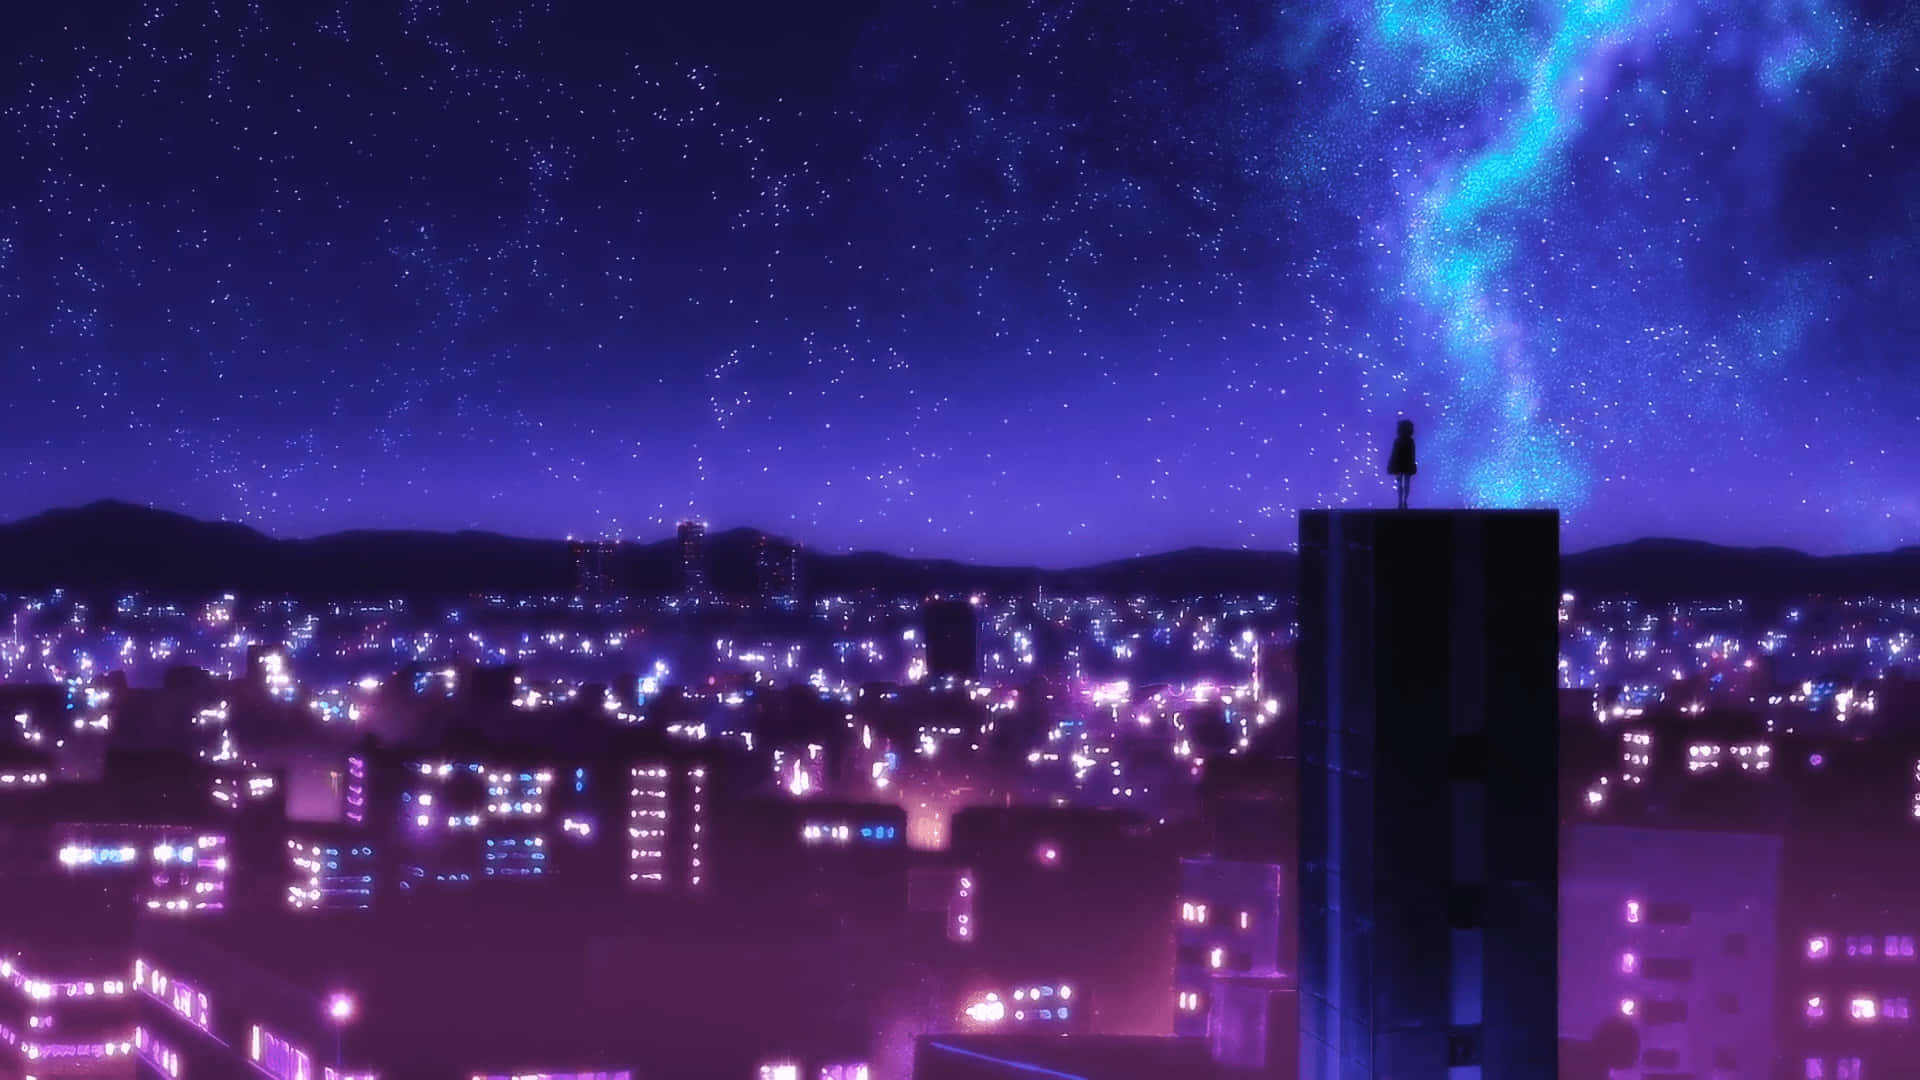 𝘼𝙣𝙞𝙢𝙚𝙨 𝘼𝙚𝙨𝙩𝙝𝙚𝙩𝙞𝙘𝙨 on Twitter  Anime city Anime scenery  Kimi no na wa